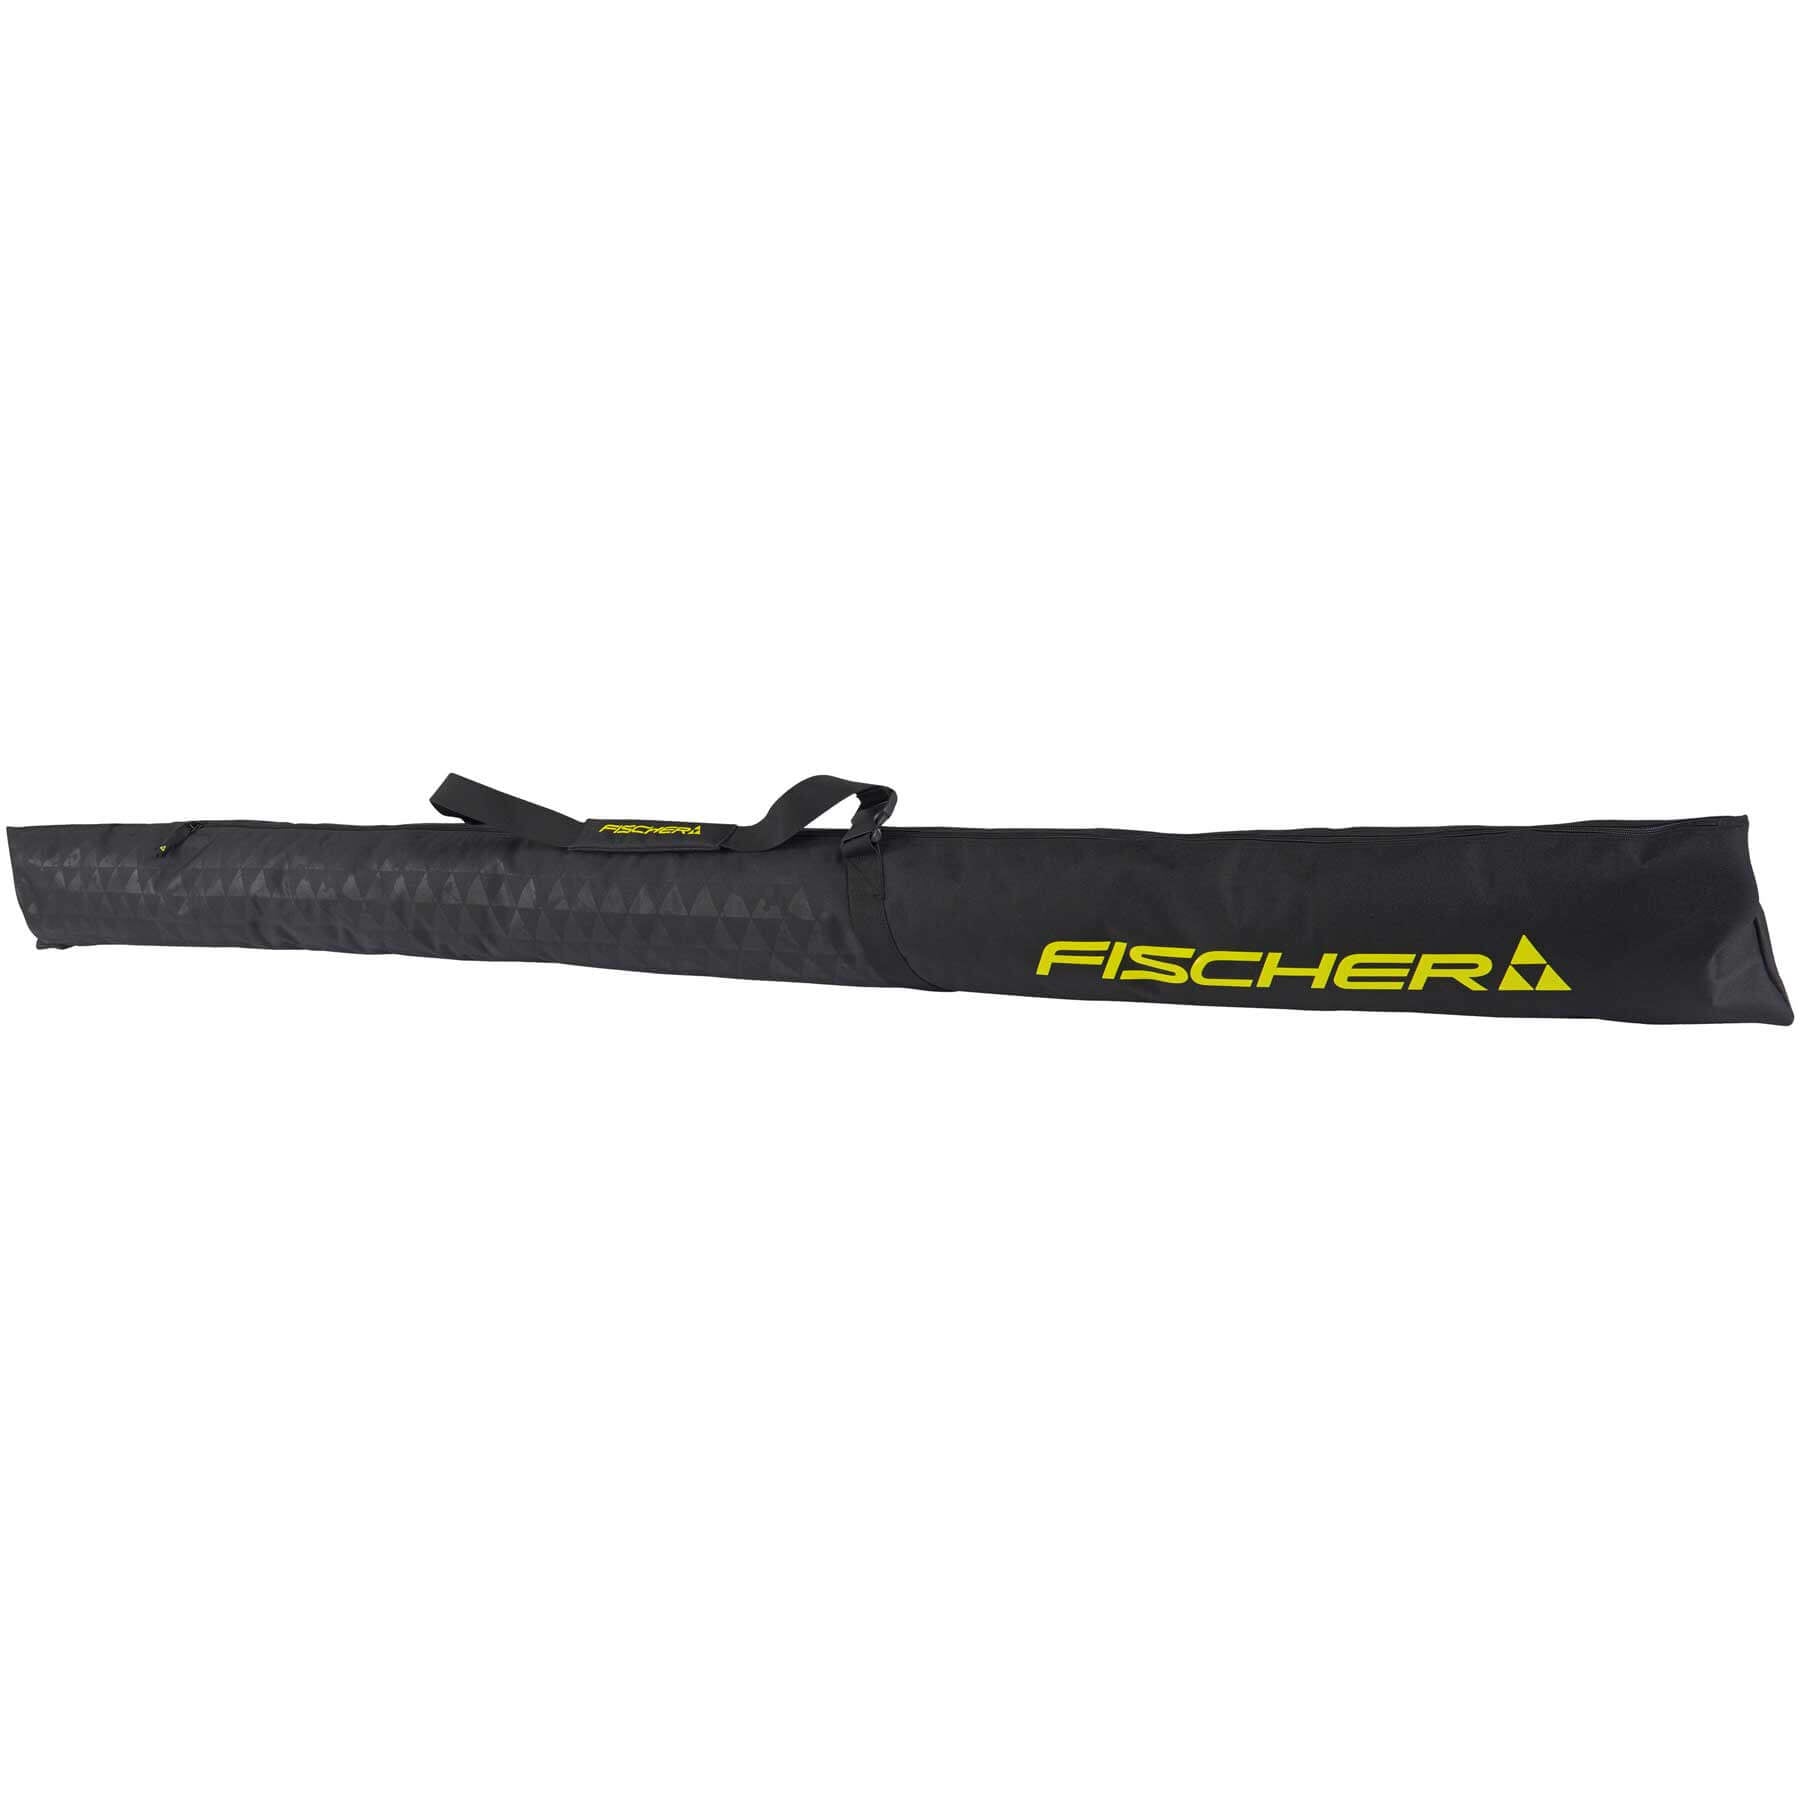 Fischer XC Ski Bag Economy 3 pair 210cm